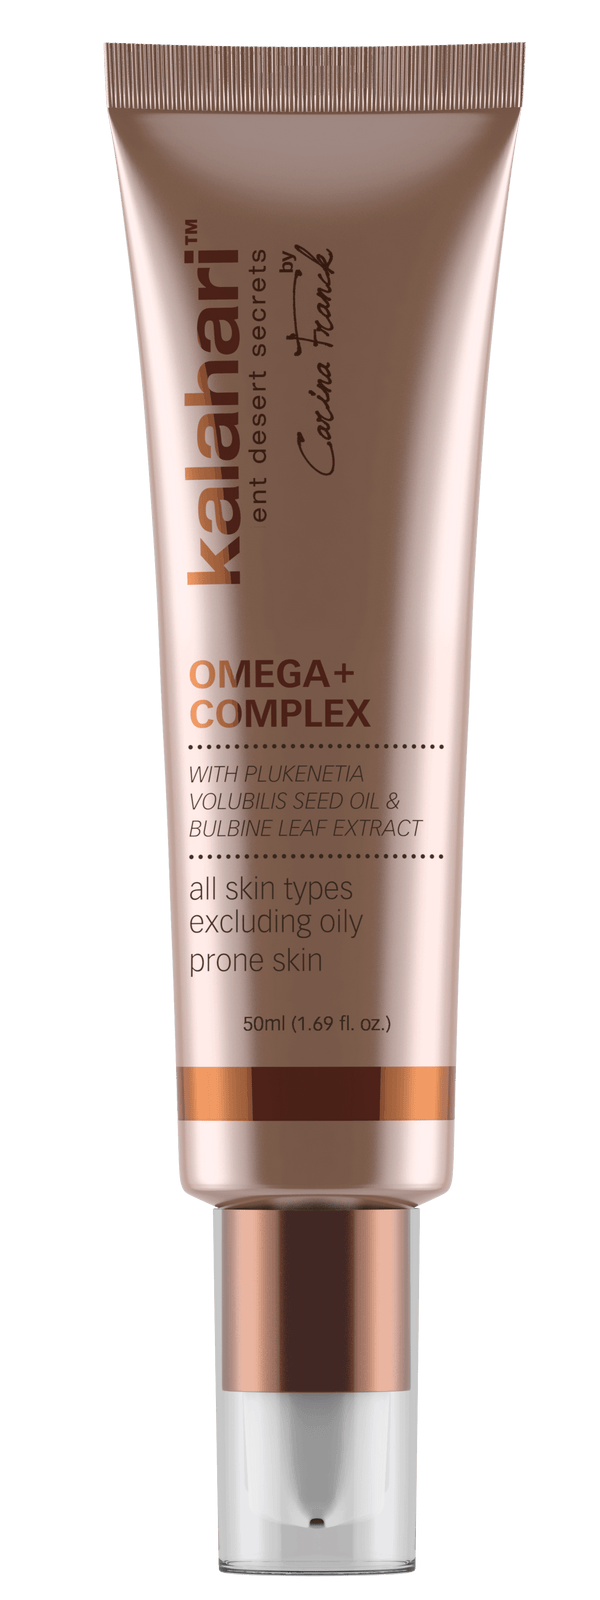 Omega+ complex with folic acid